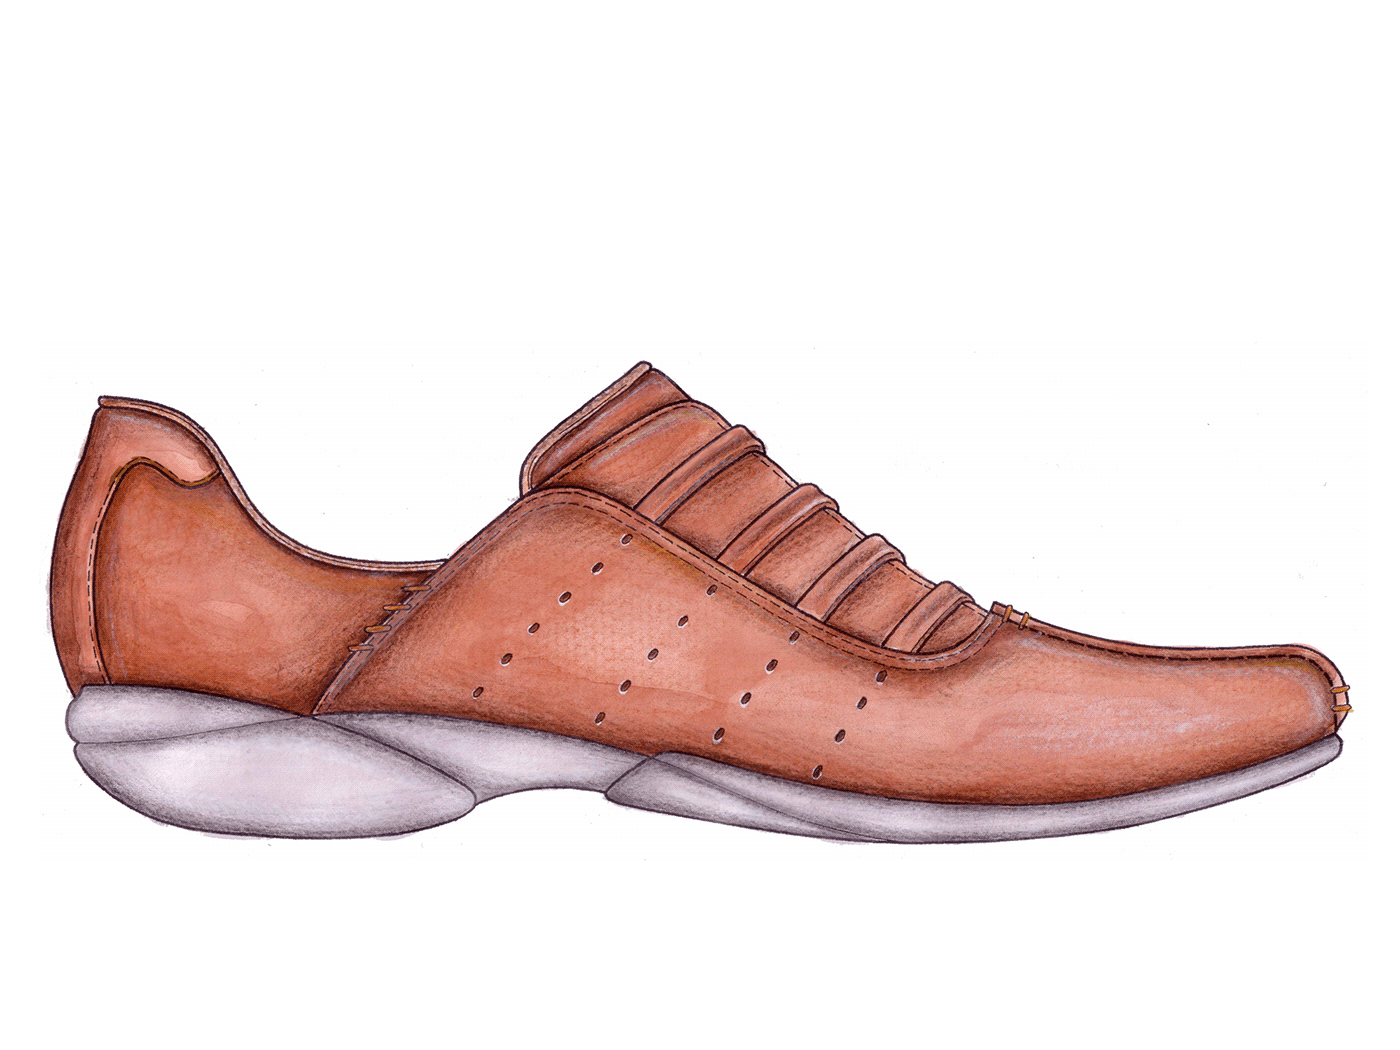 Fashion  footwear footwear designs handmade leather shoes Shoe Designs shoes sneakers